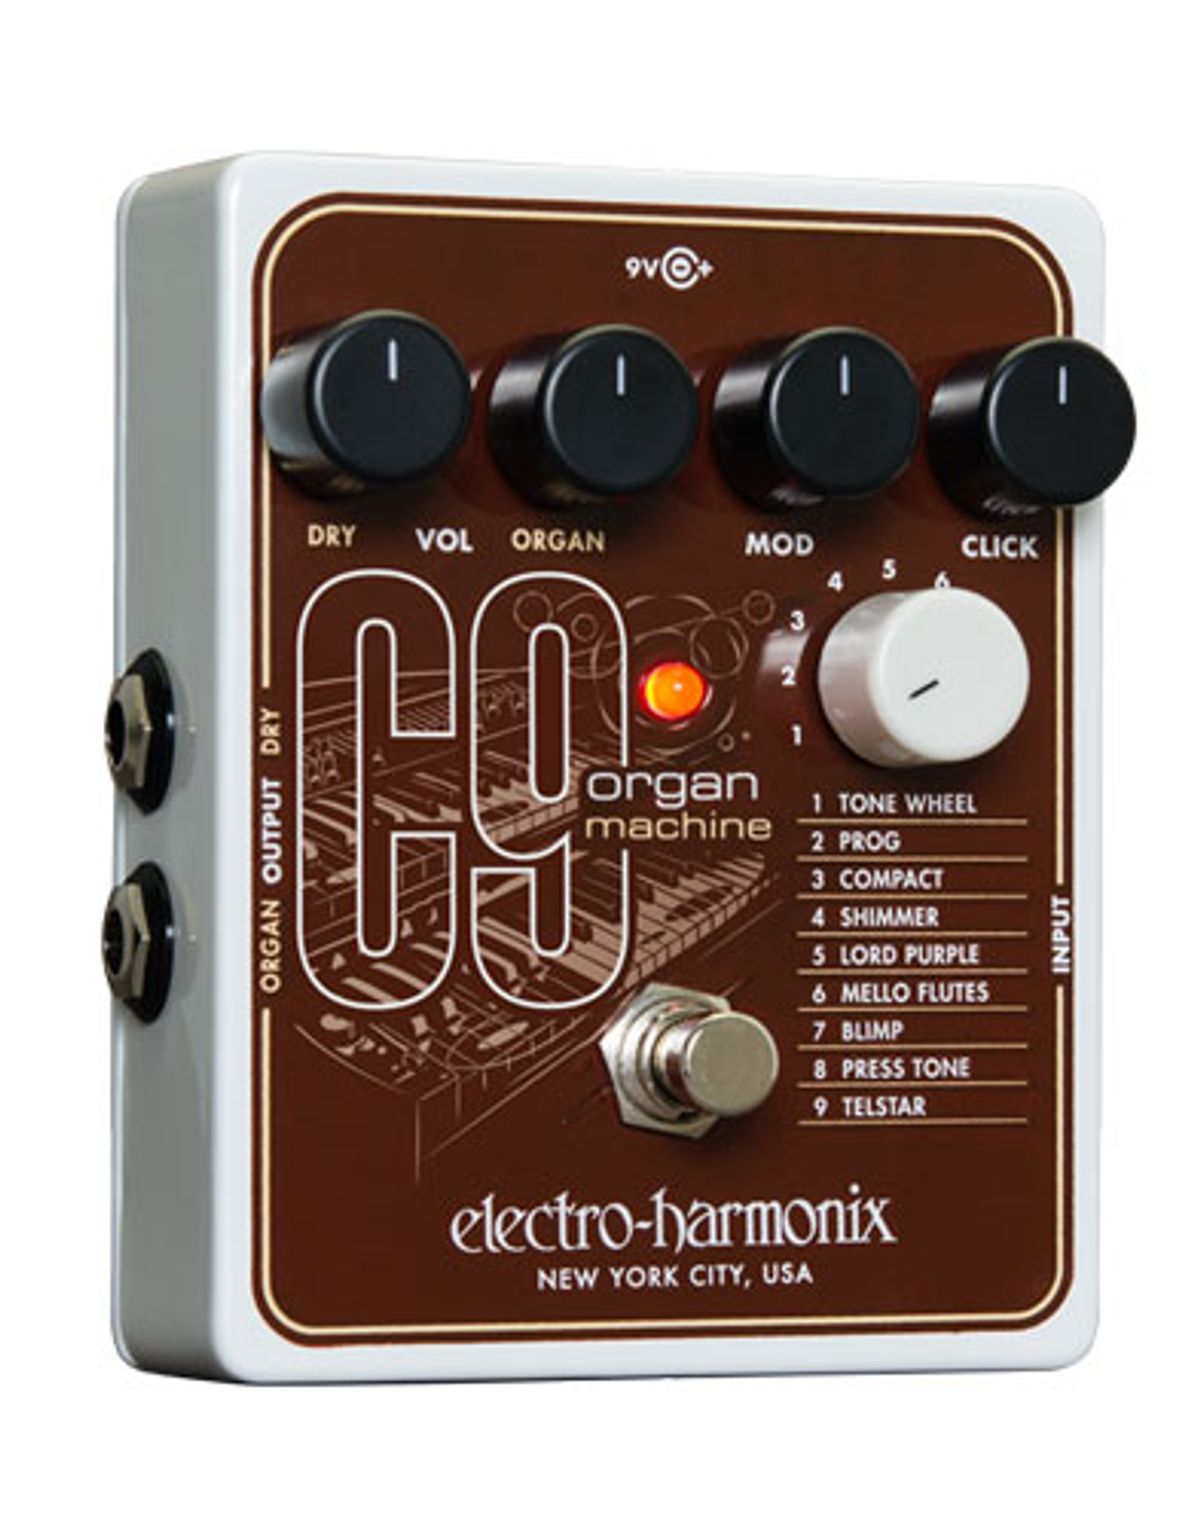 Electro-Harmonix Introduces the C9 Organ Machine